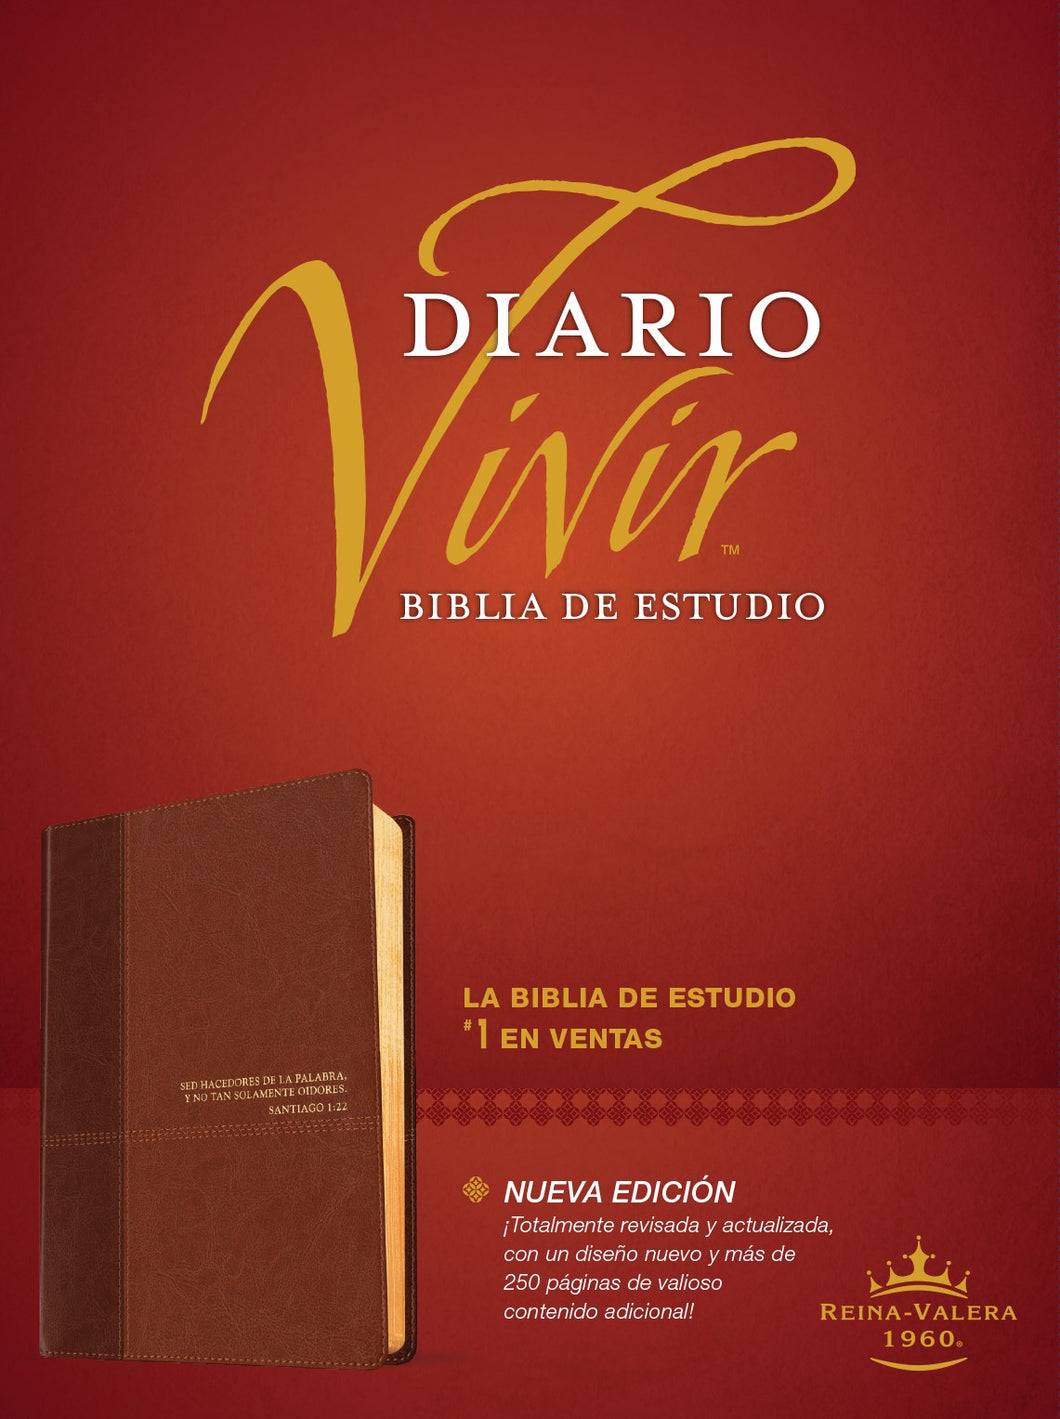 Spanish-RVR 1960 Life Application Study Bible (Biblia de Estudio del Diario Vivir)-Brown/Tan LeatherLike